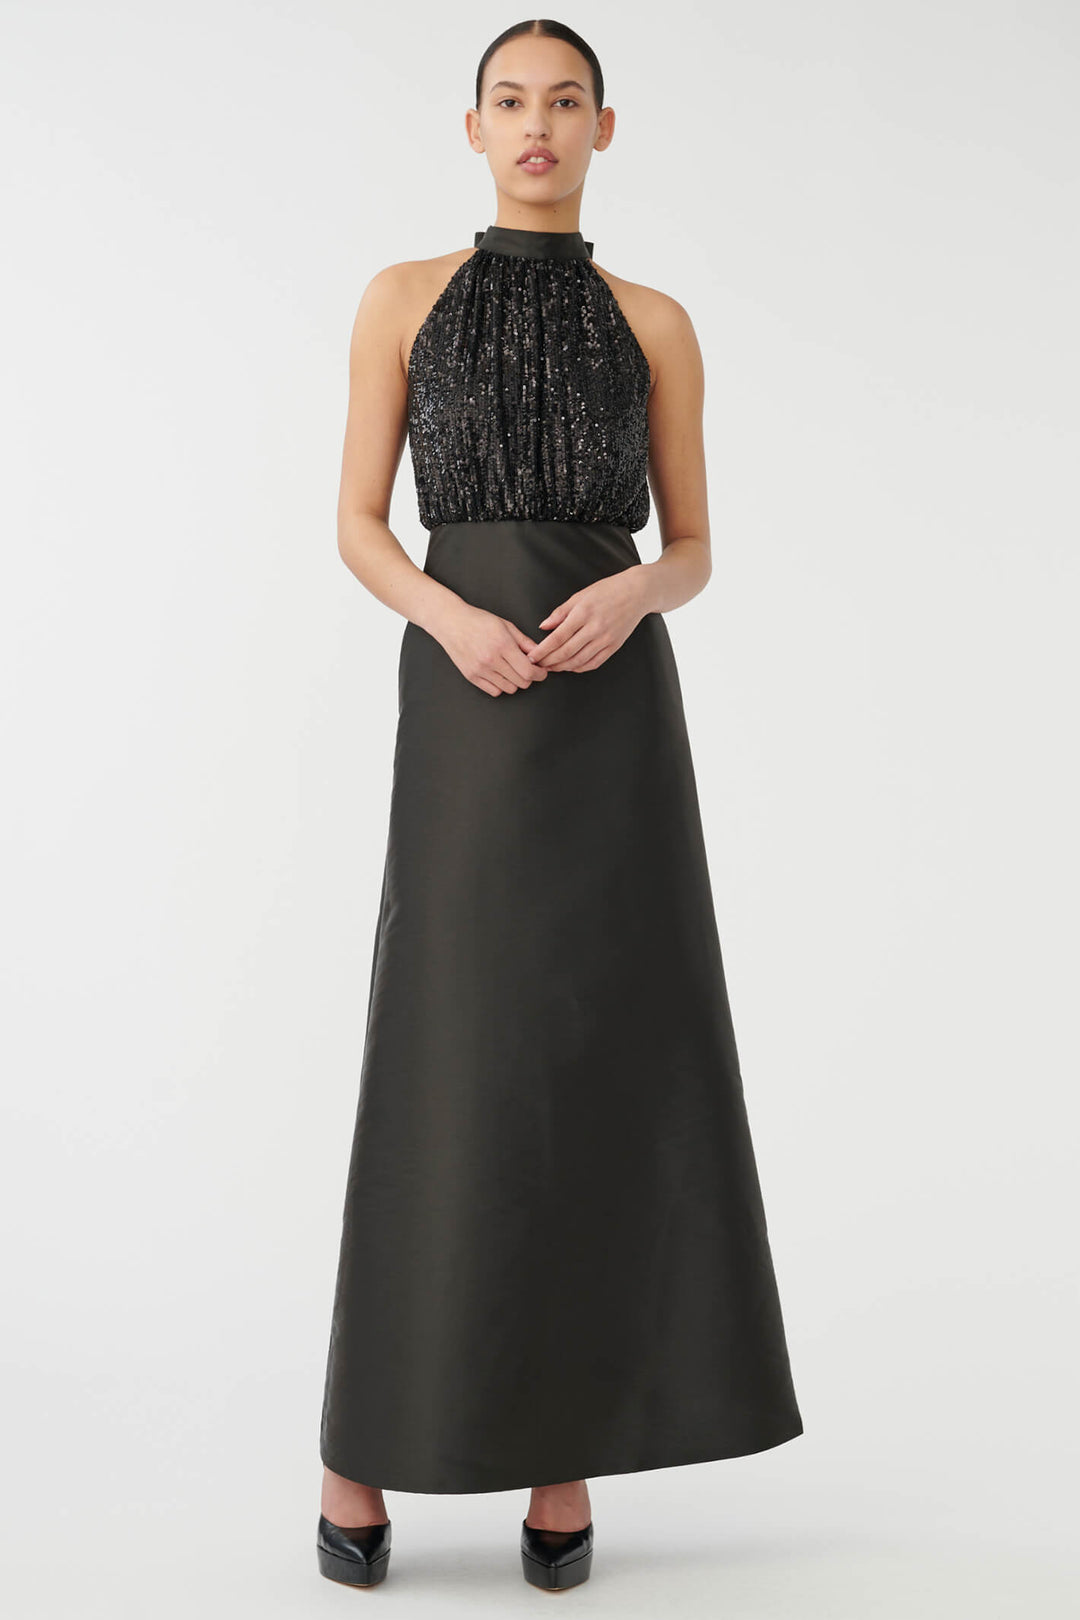 Dea Kudibal Monrie 0141023 Black Halter Neck Long Evening Dress - Olivia Grace Fashion